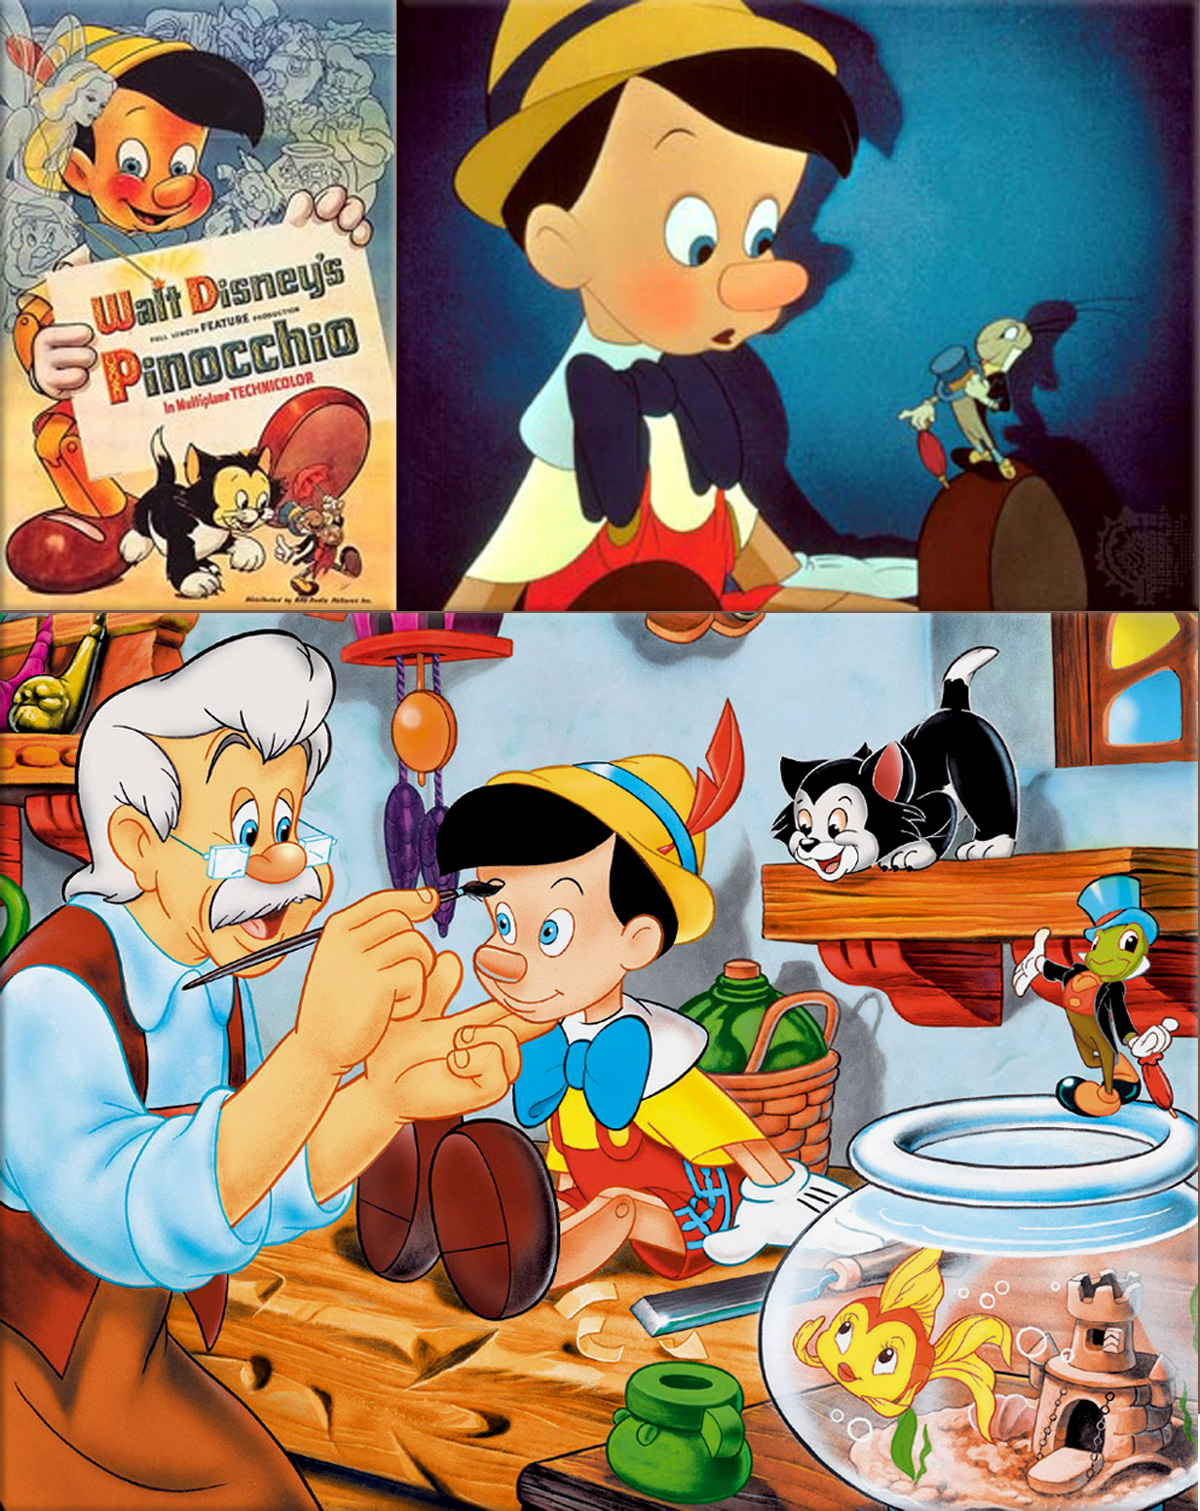 The second full length animated Walt Disney film, Pinocchio, premieres on February 7, 1940